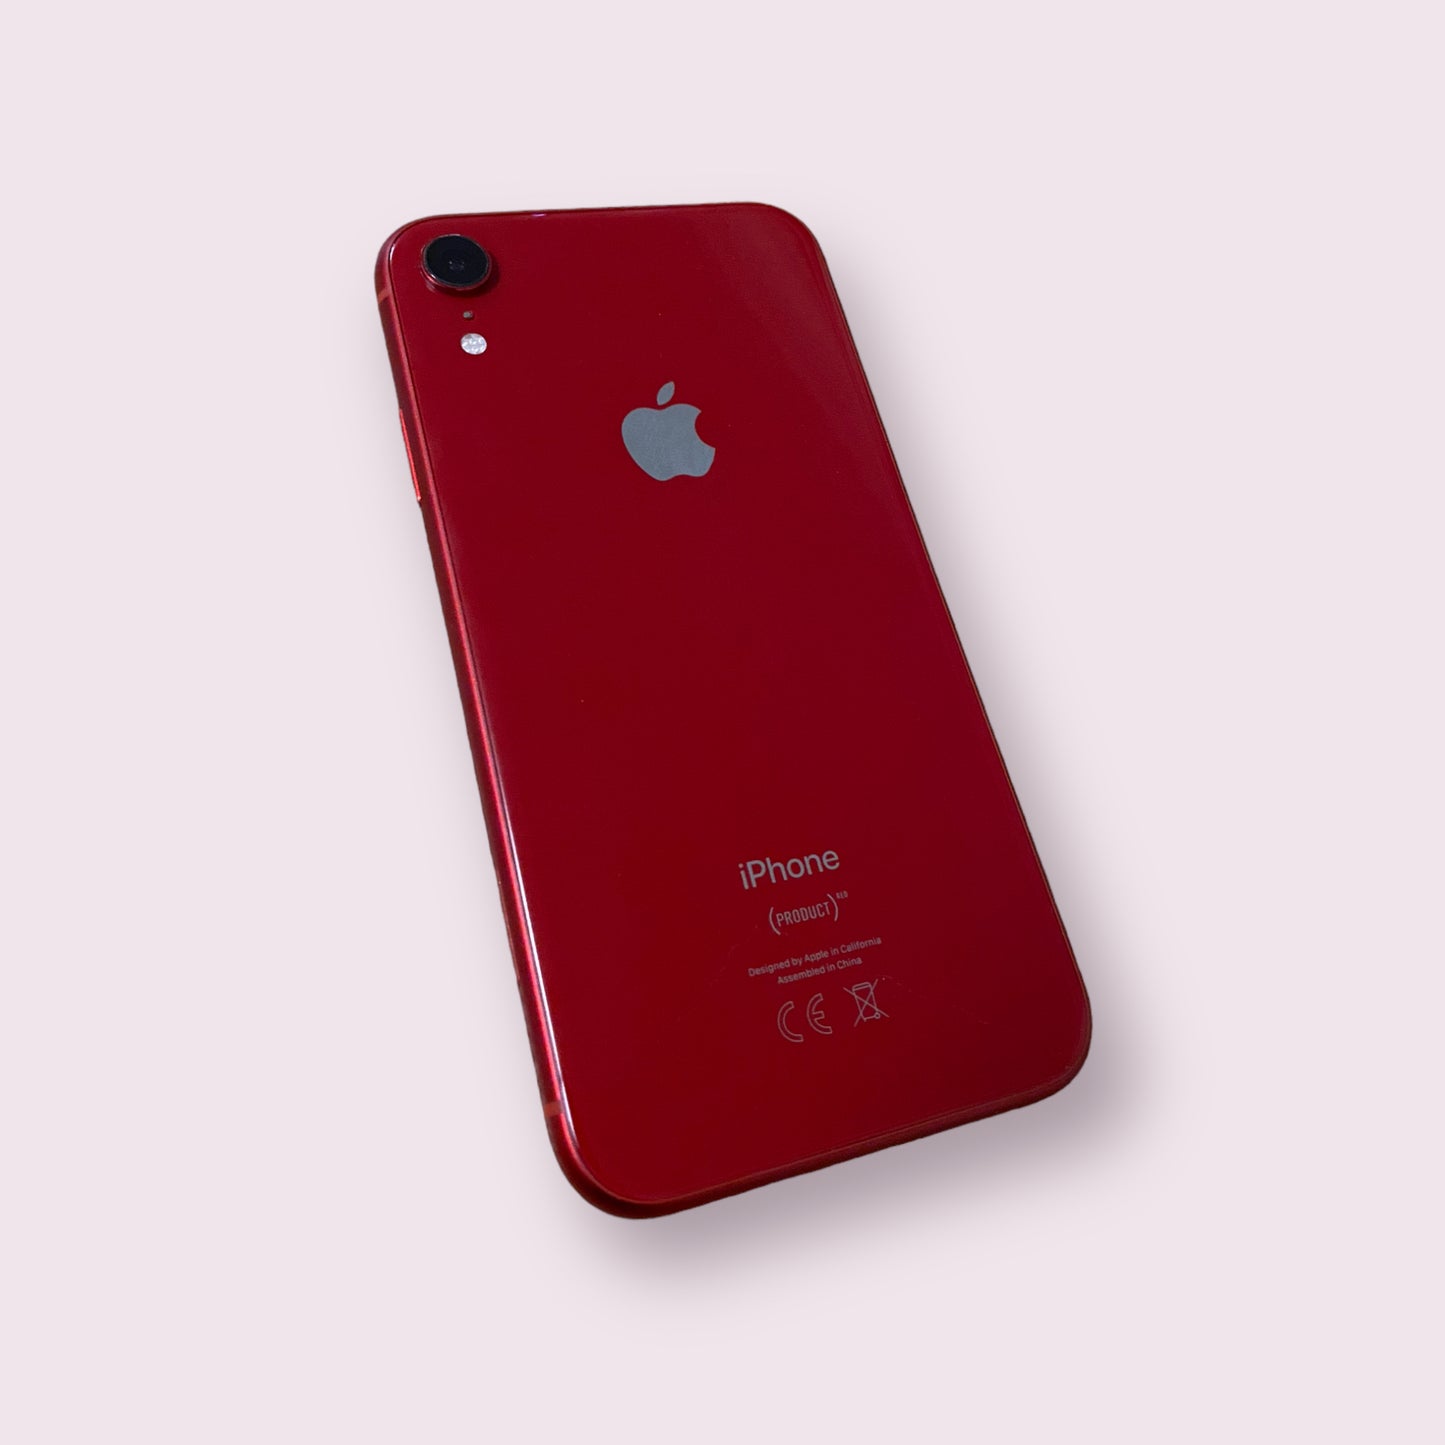 NO FACE ID Apple iPhone XR 64GB Red Unlocked - Grade B